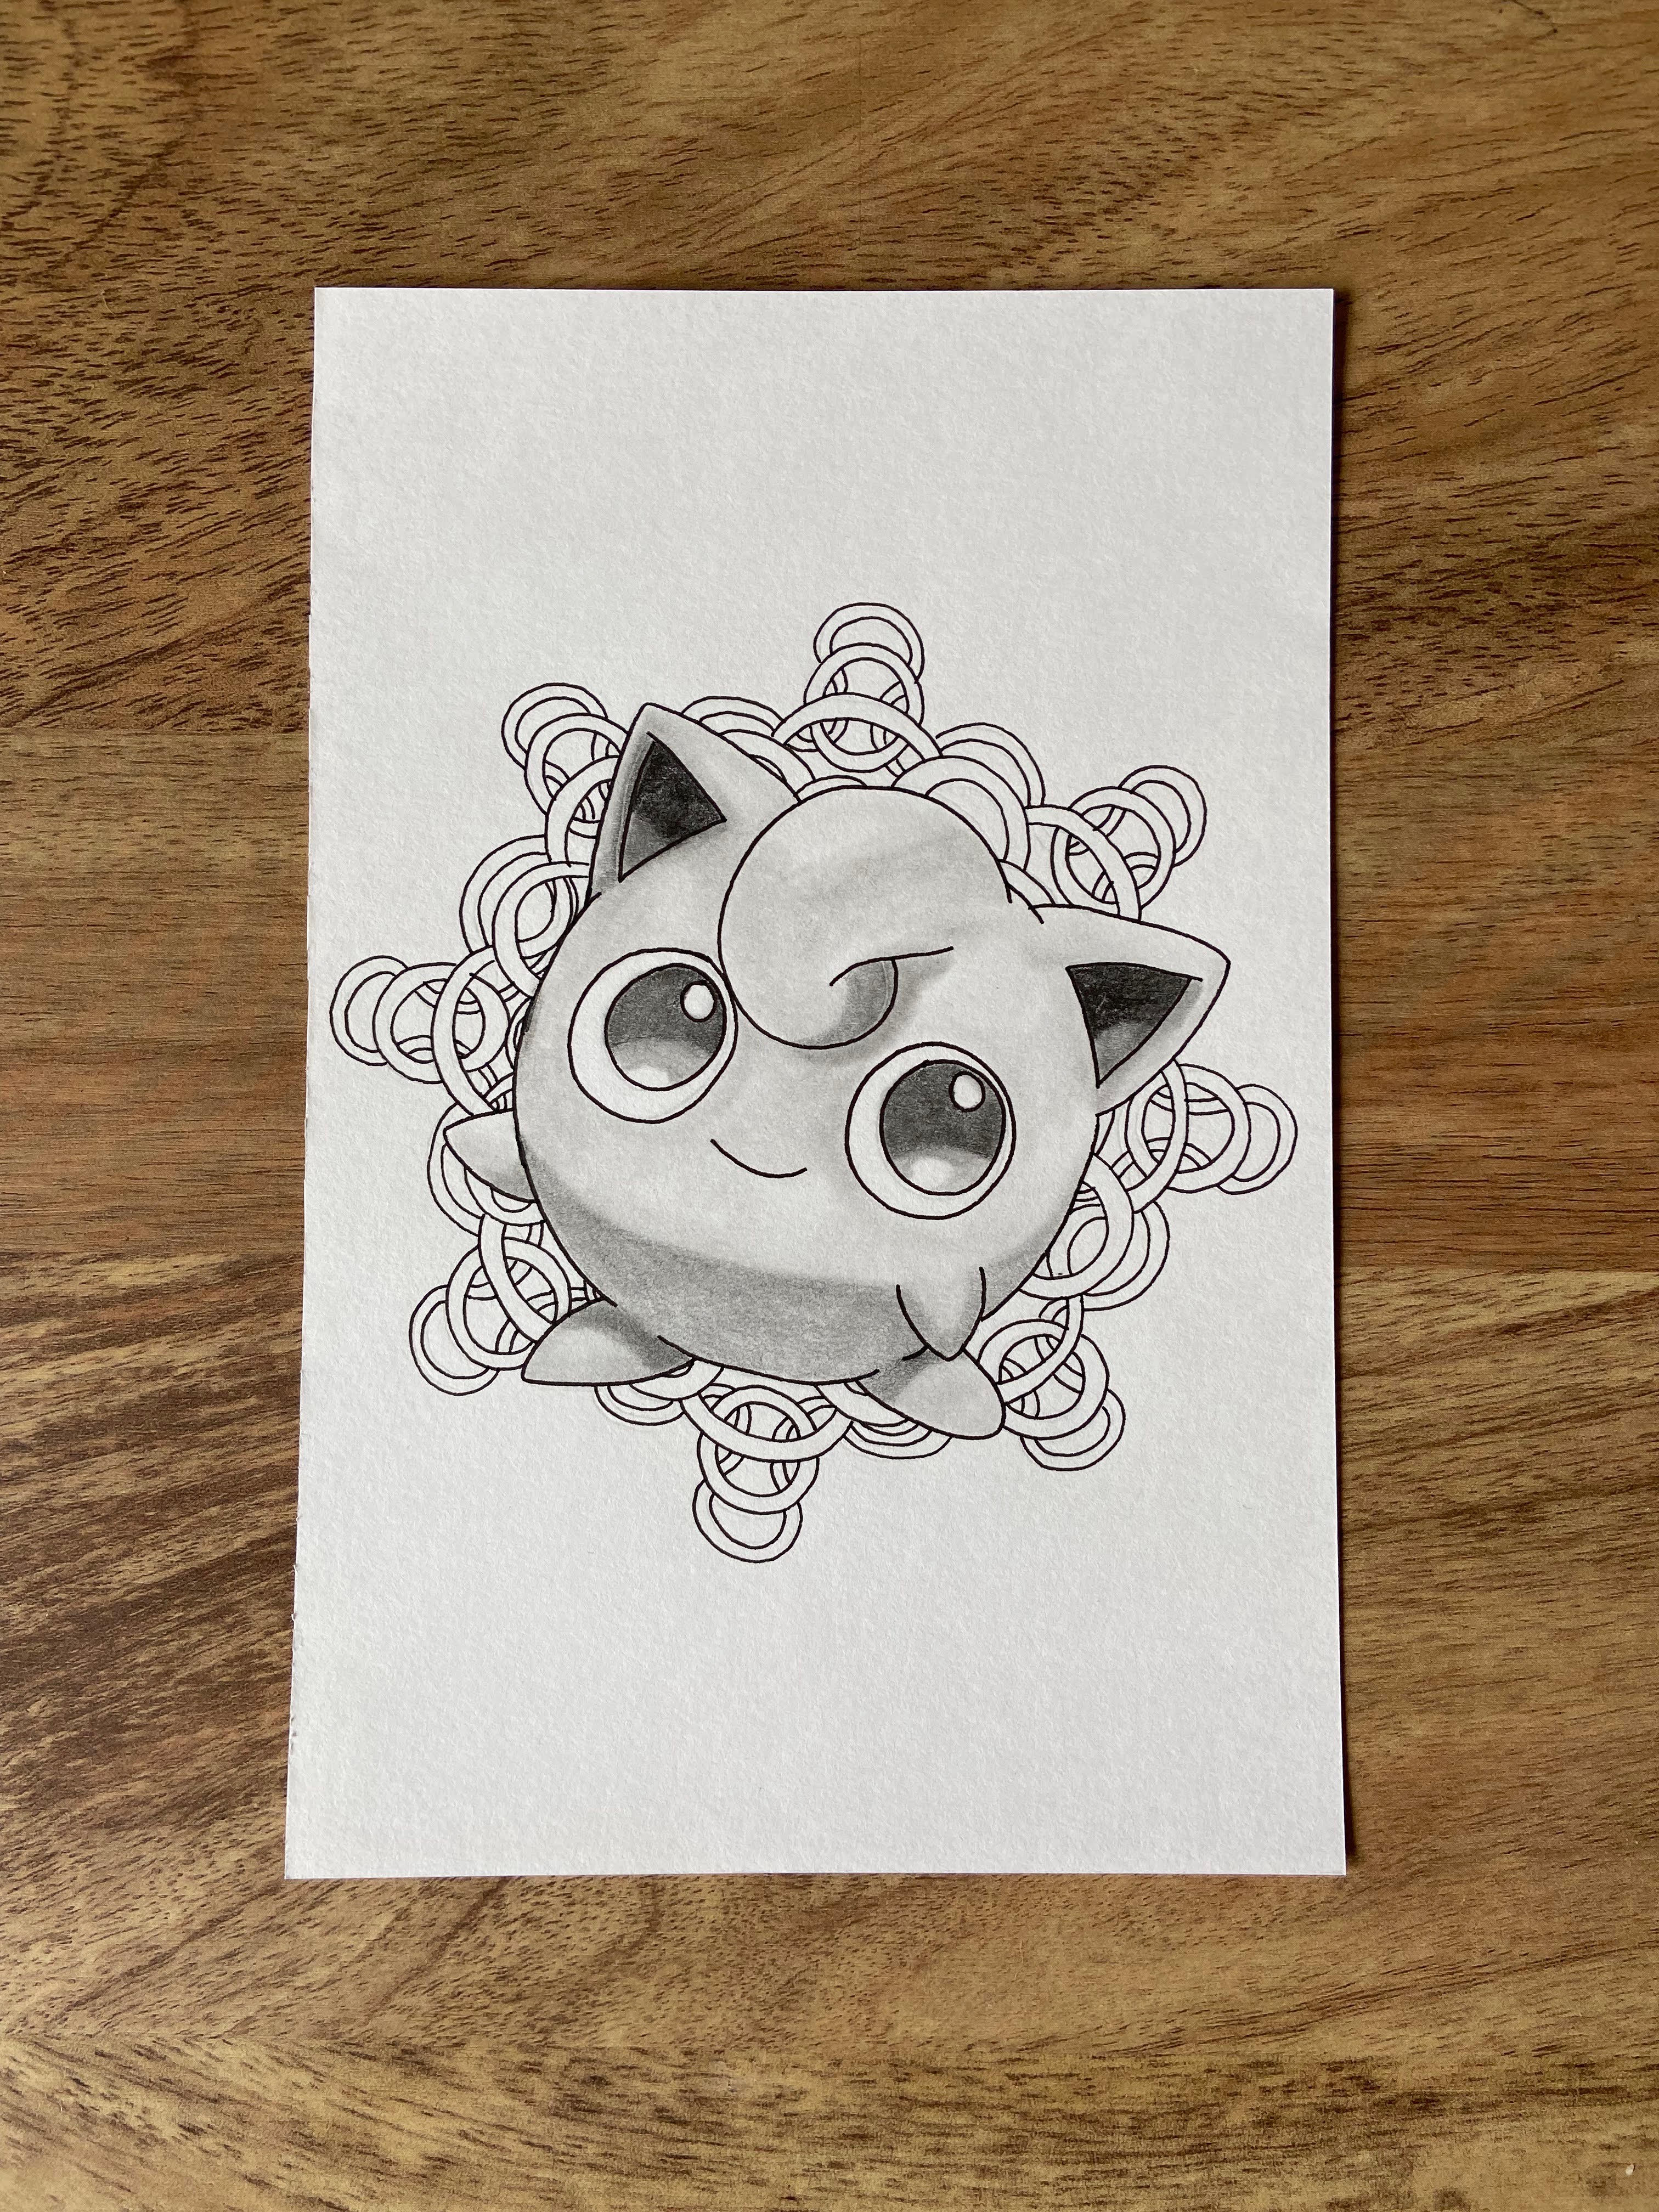 Pencil drawing of the Pokemon JigglyPuff